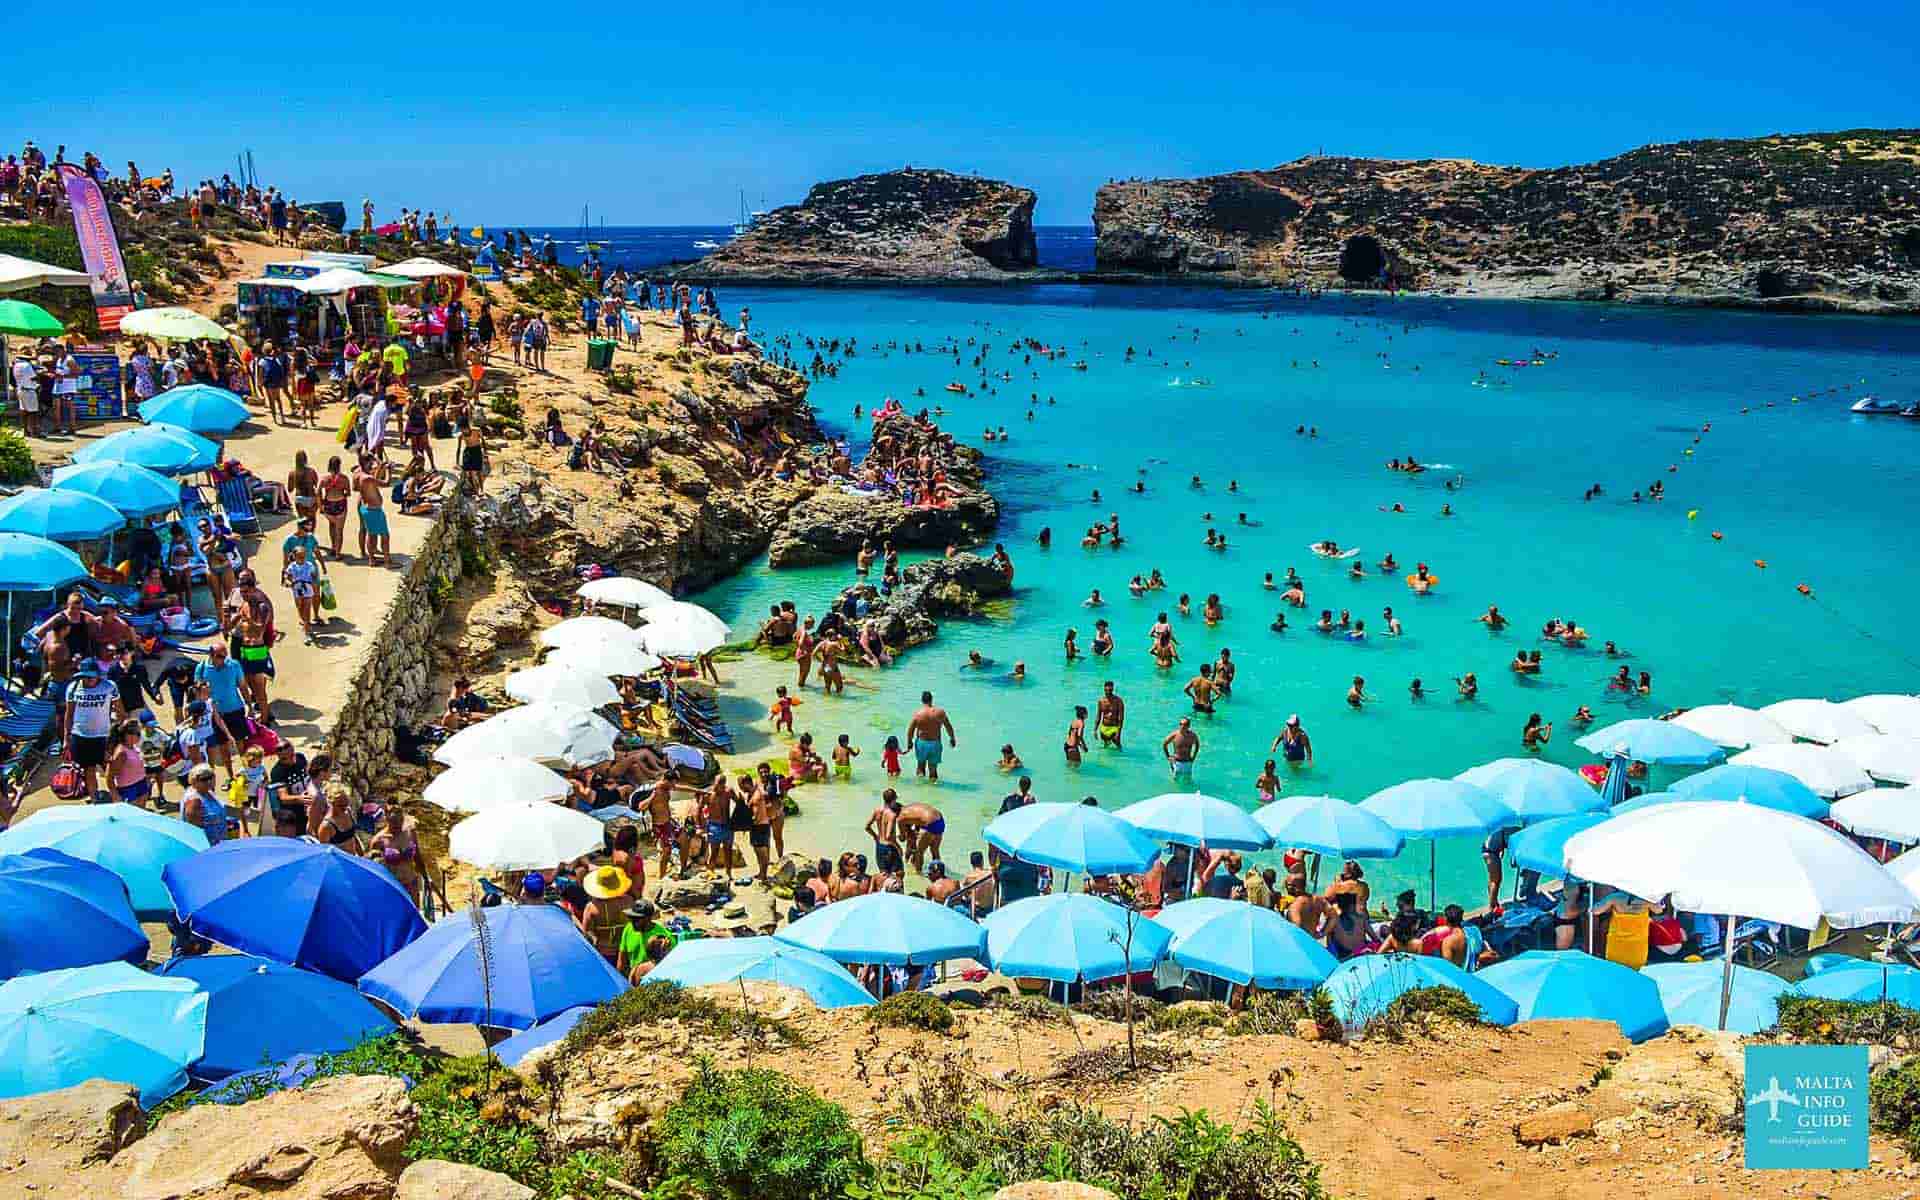 People sunbathing and swimming in the sea at Blue Lagoon Malta.